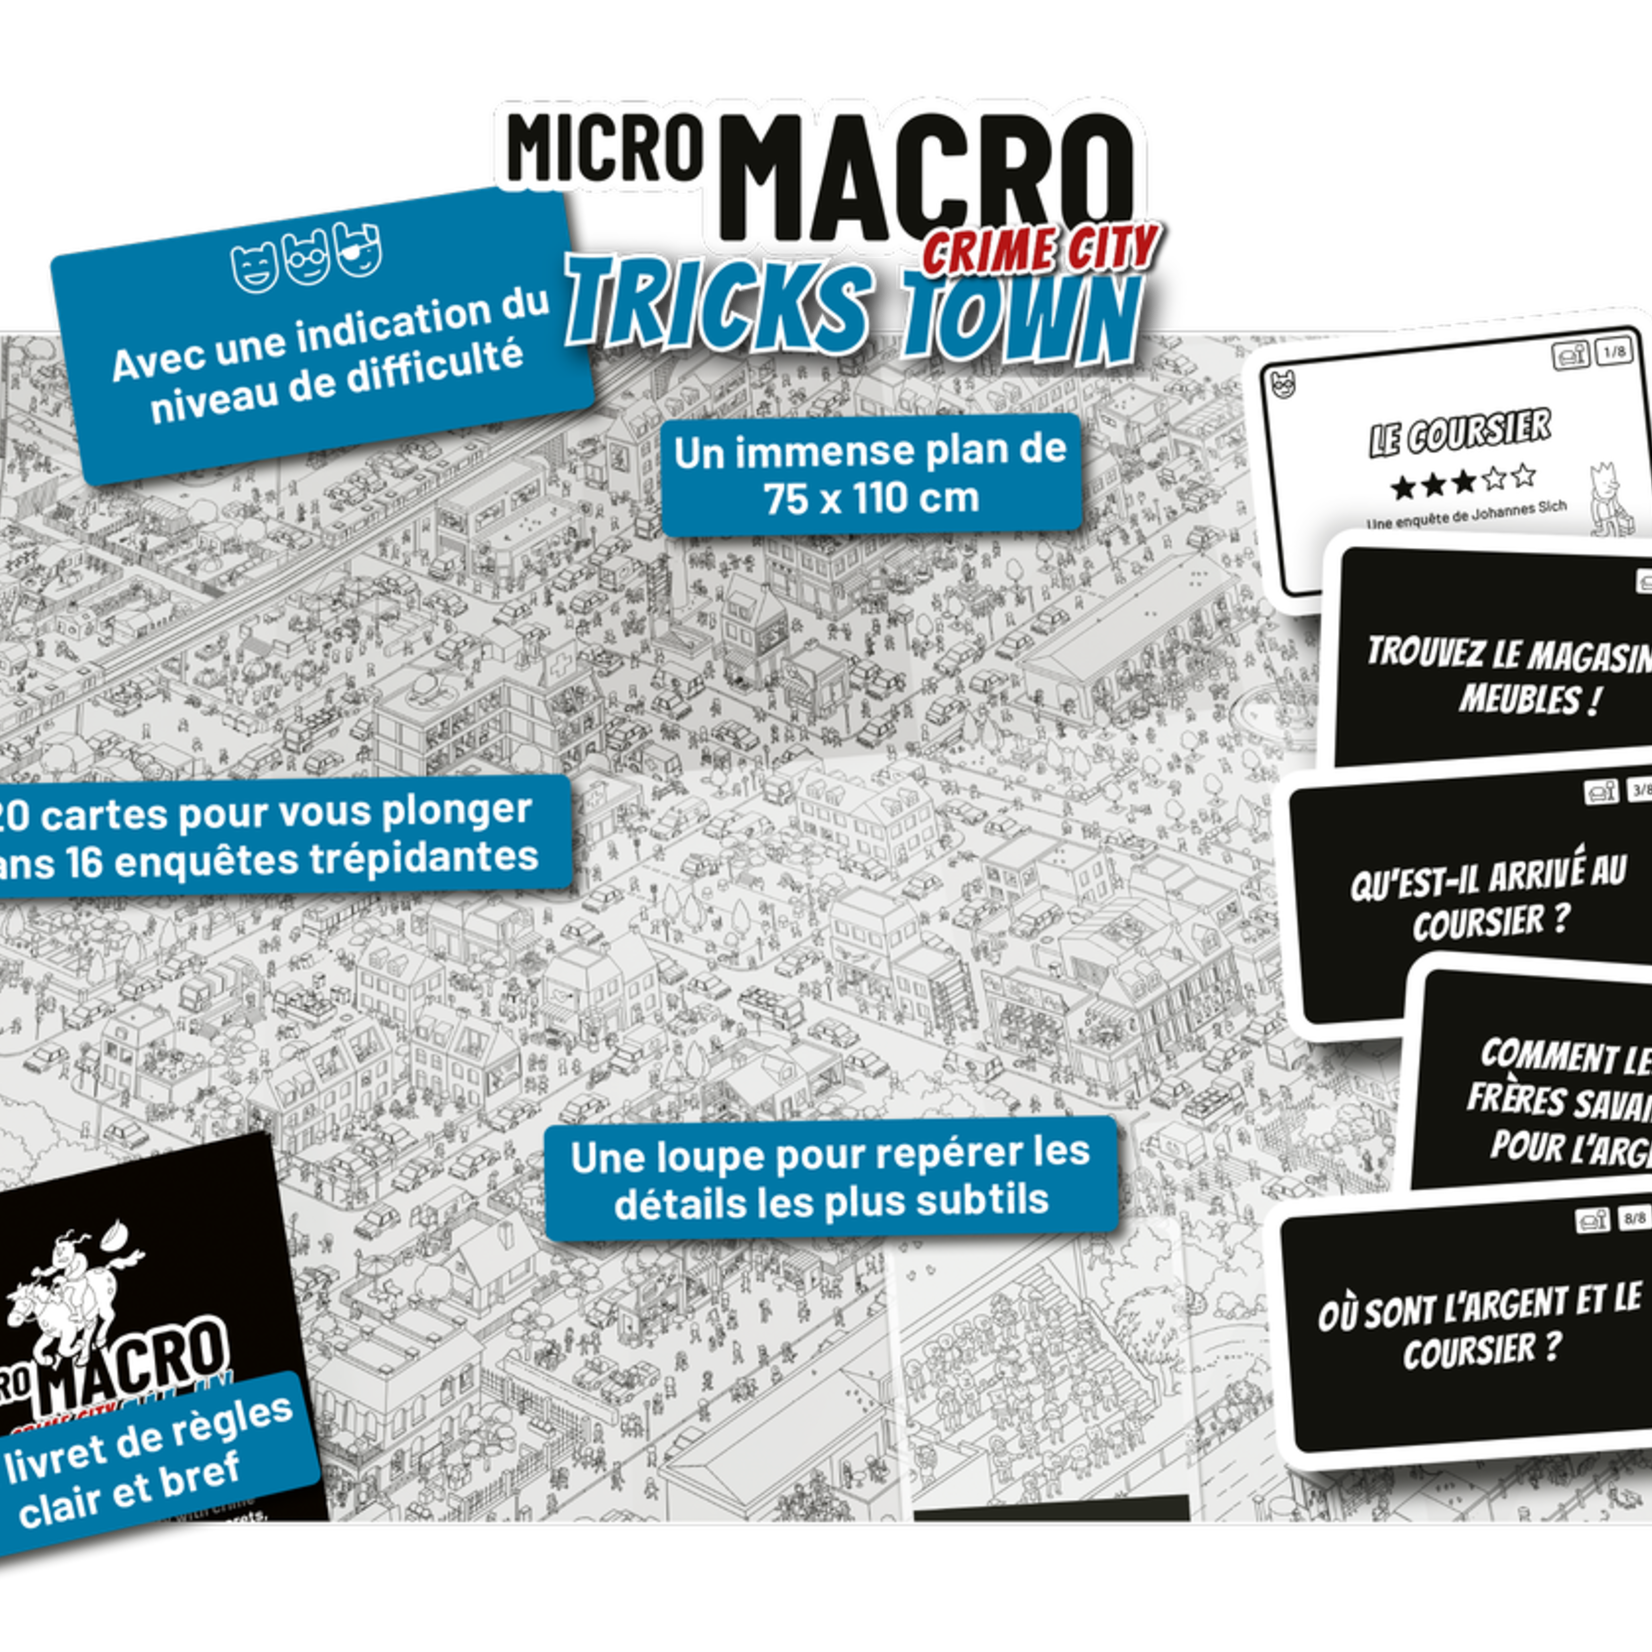 Blackrock Games Micro Macro Crime City - Tricks Town